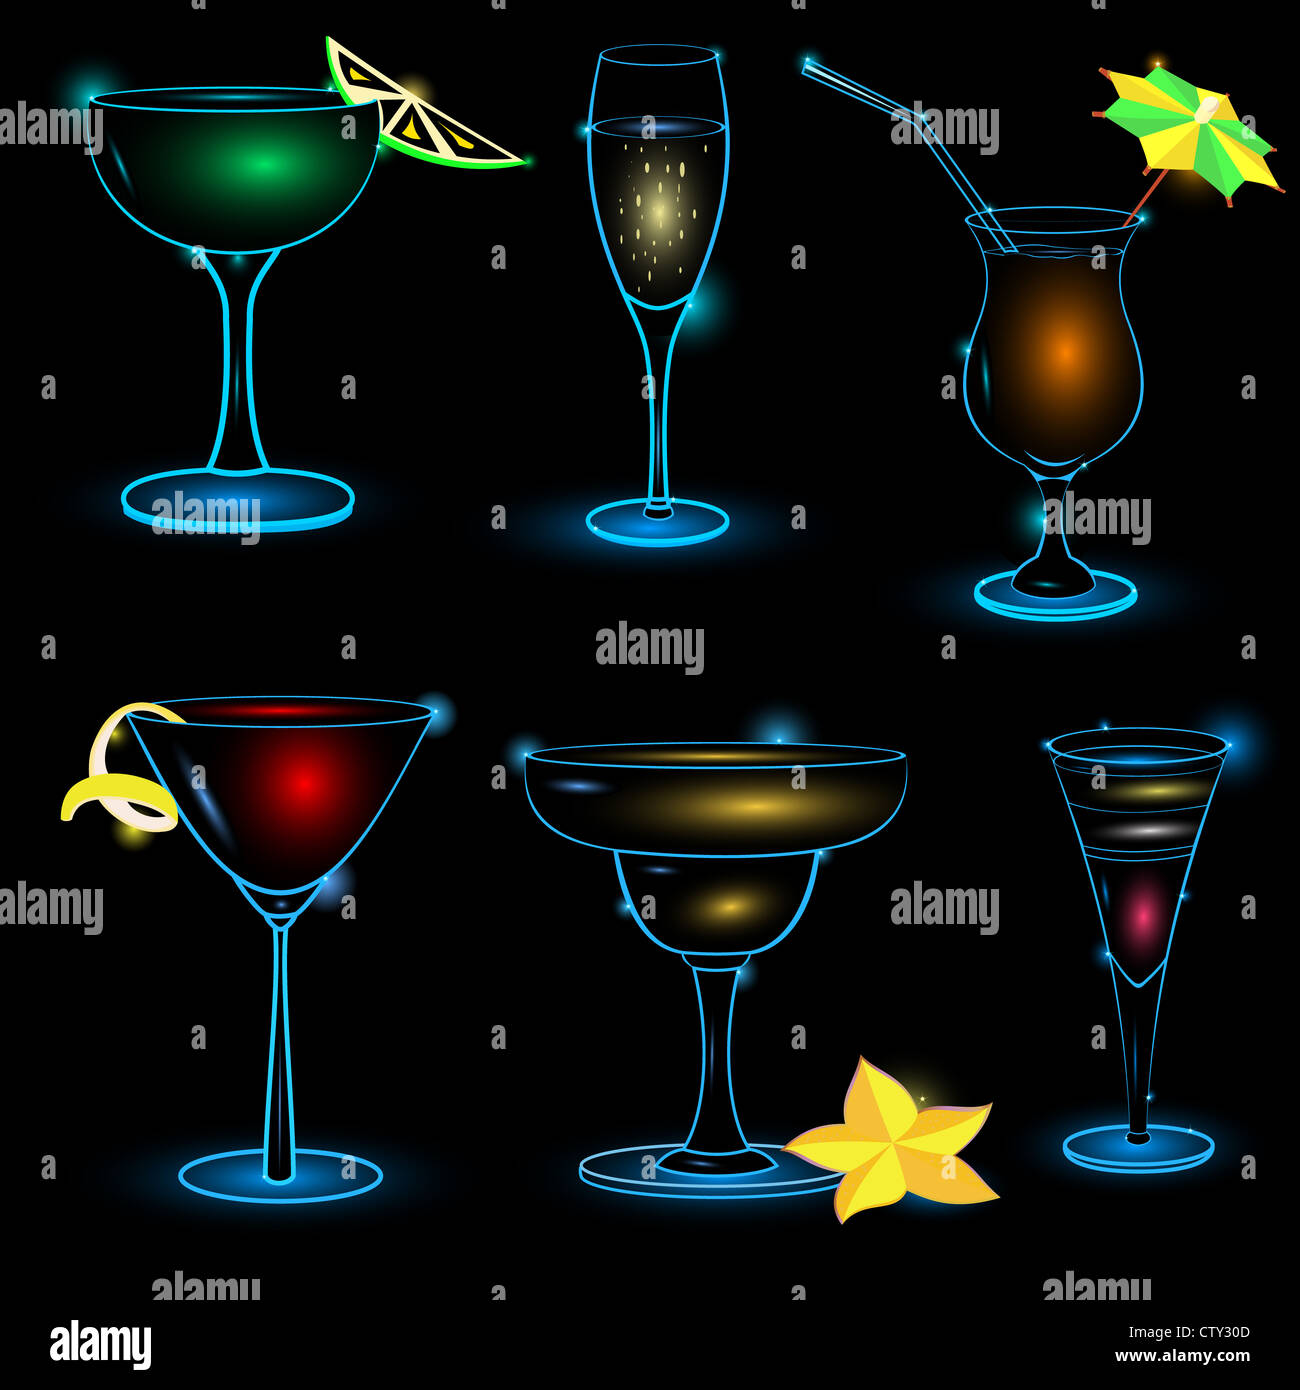 https://c8.alamy.com/comp/CTY30D/vector-illustration-ofneon-cocktail-icon-set-on-black-background-CTY30D.jpg